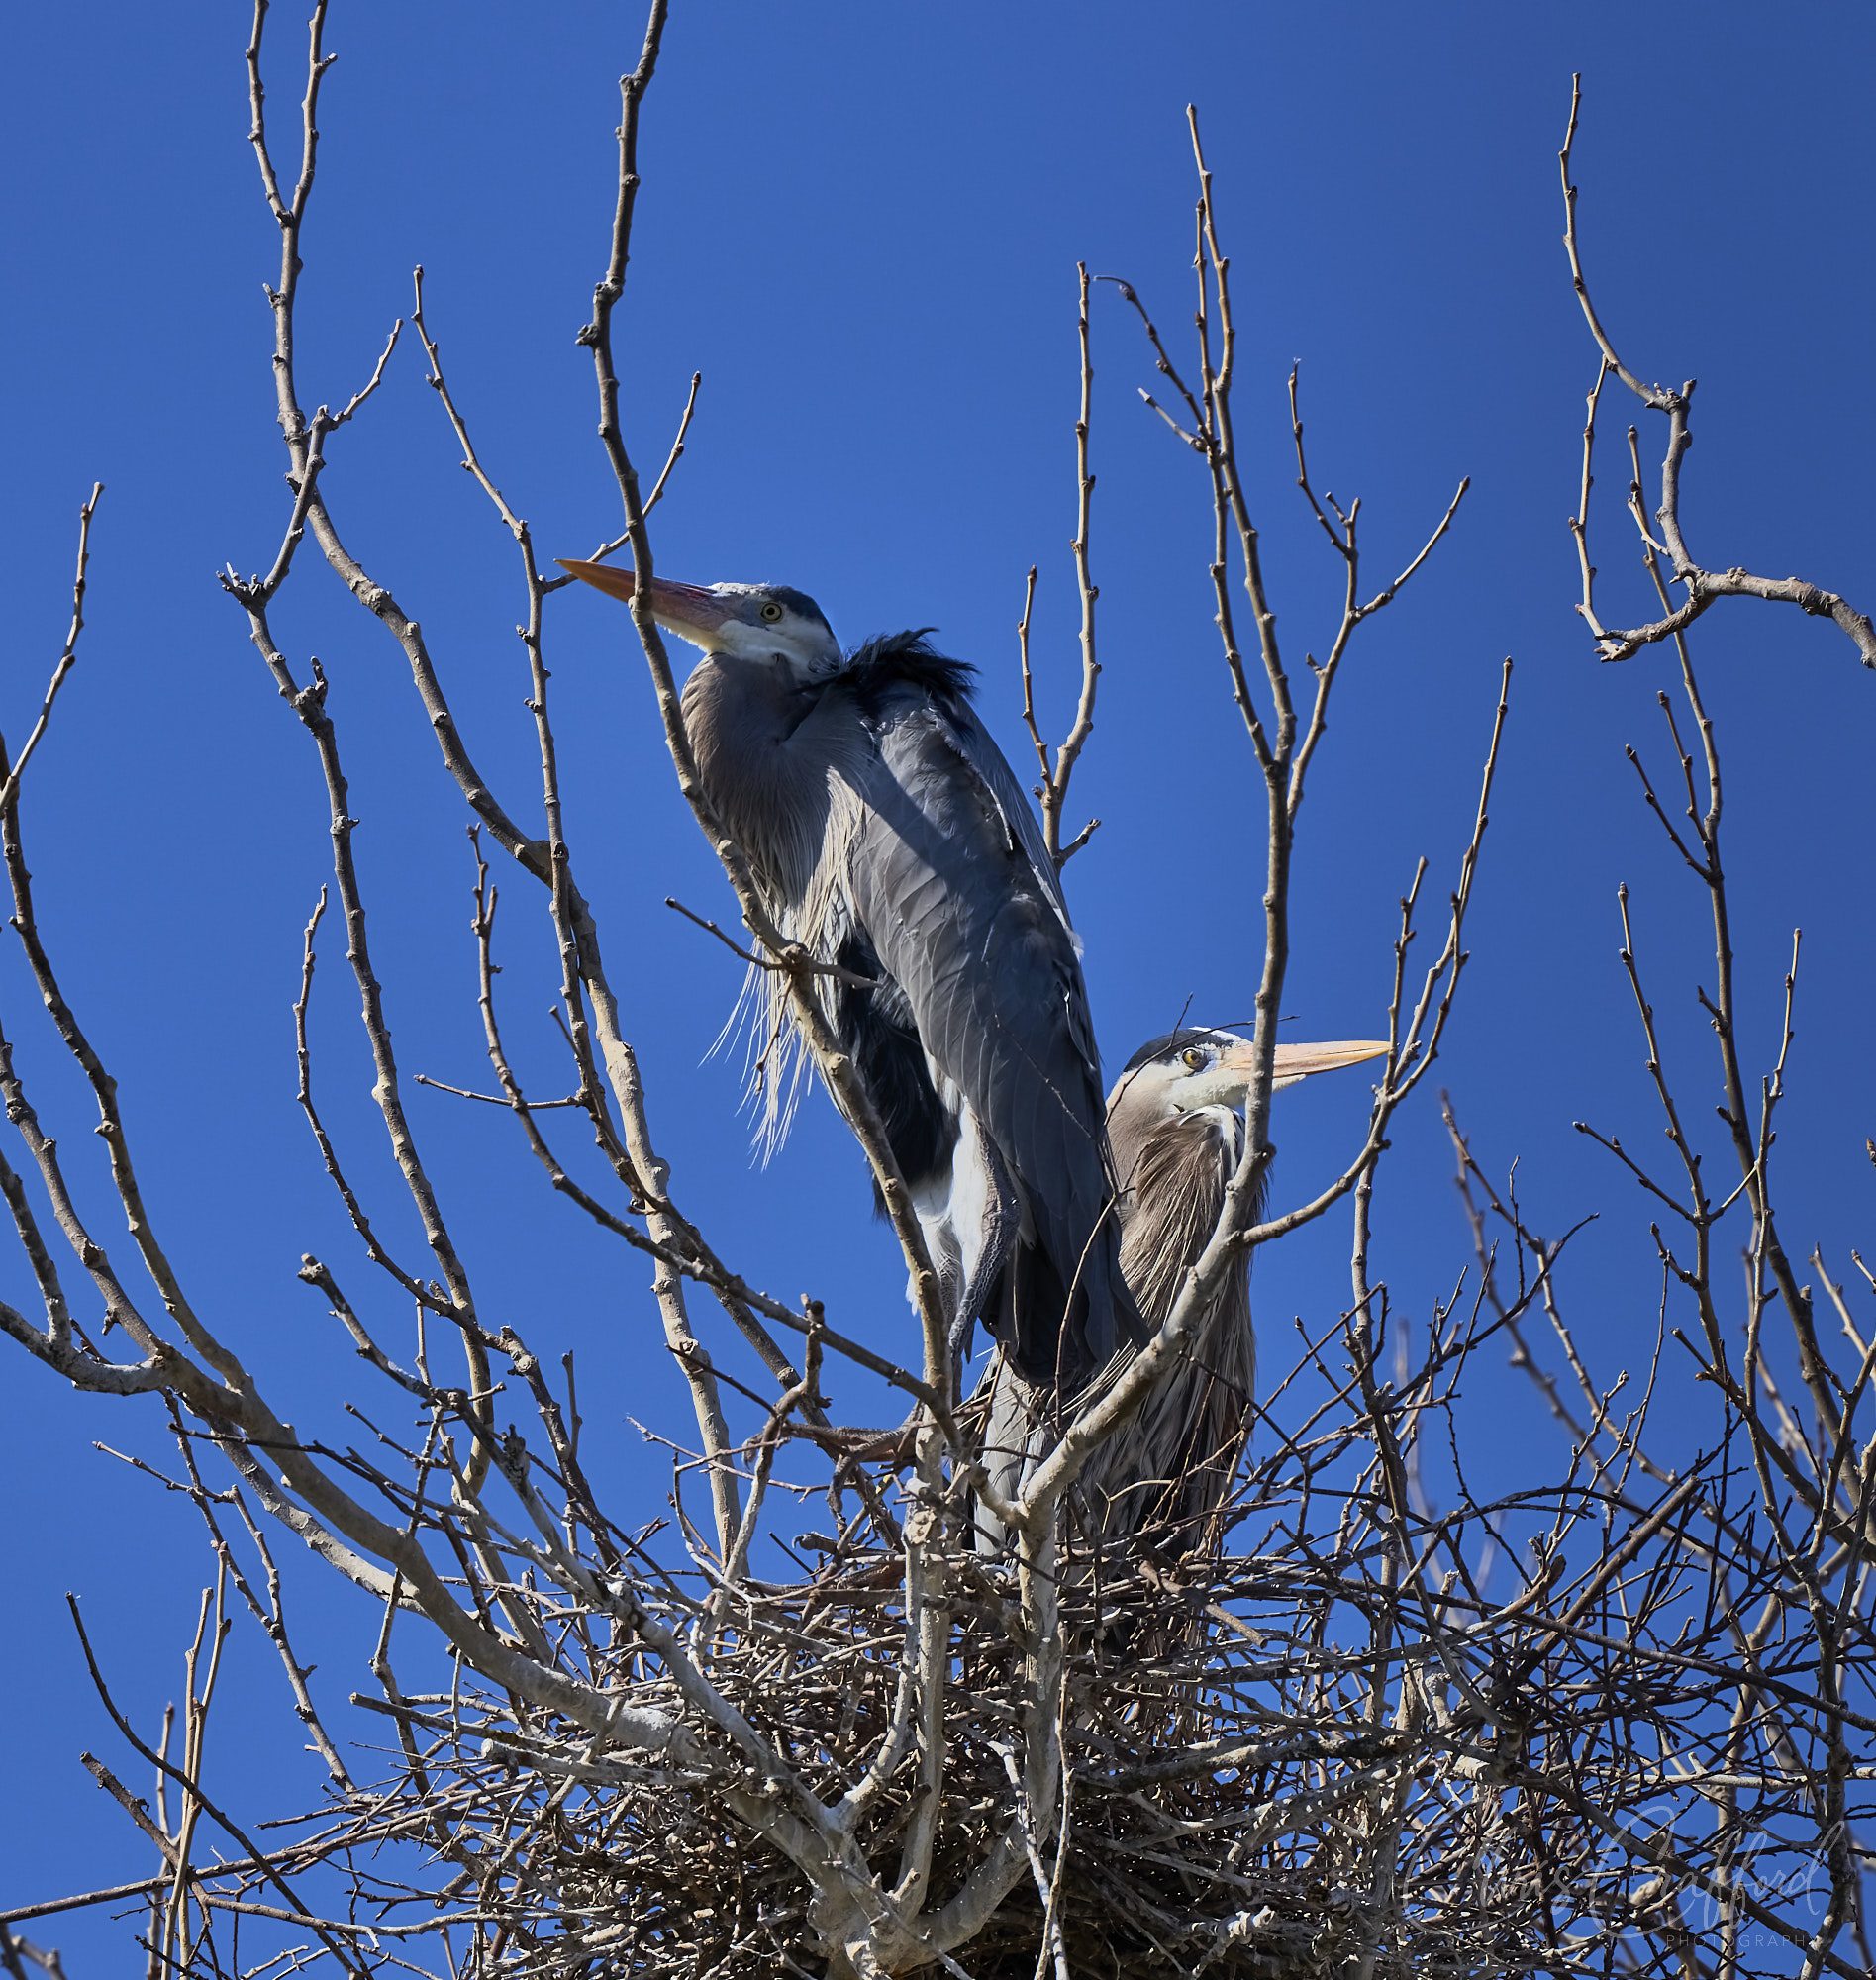 Heron pair on their nest